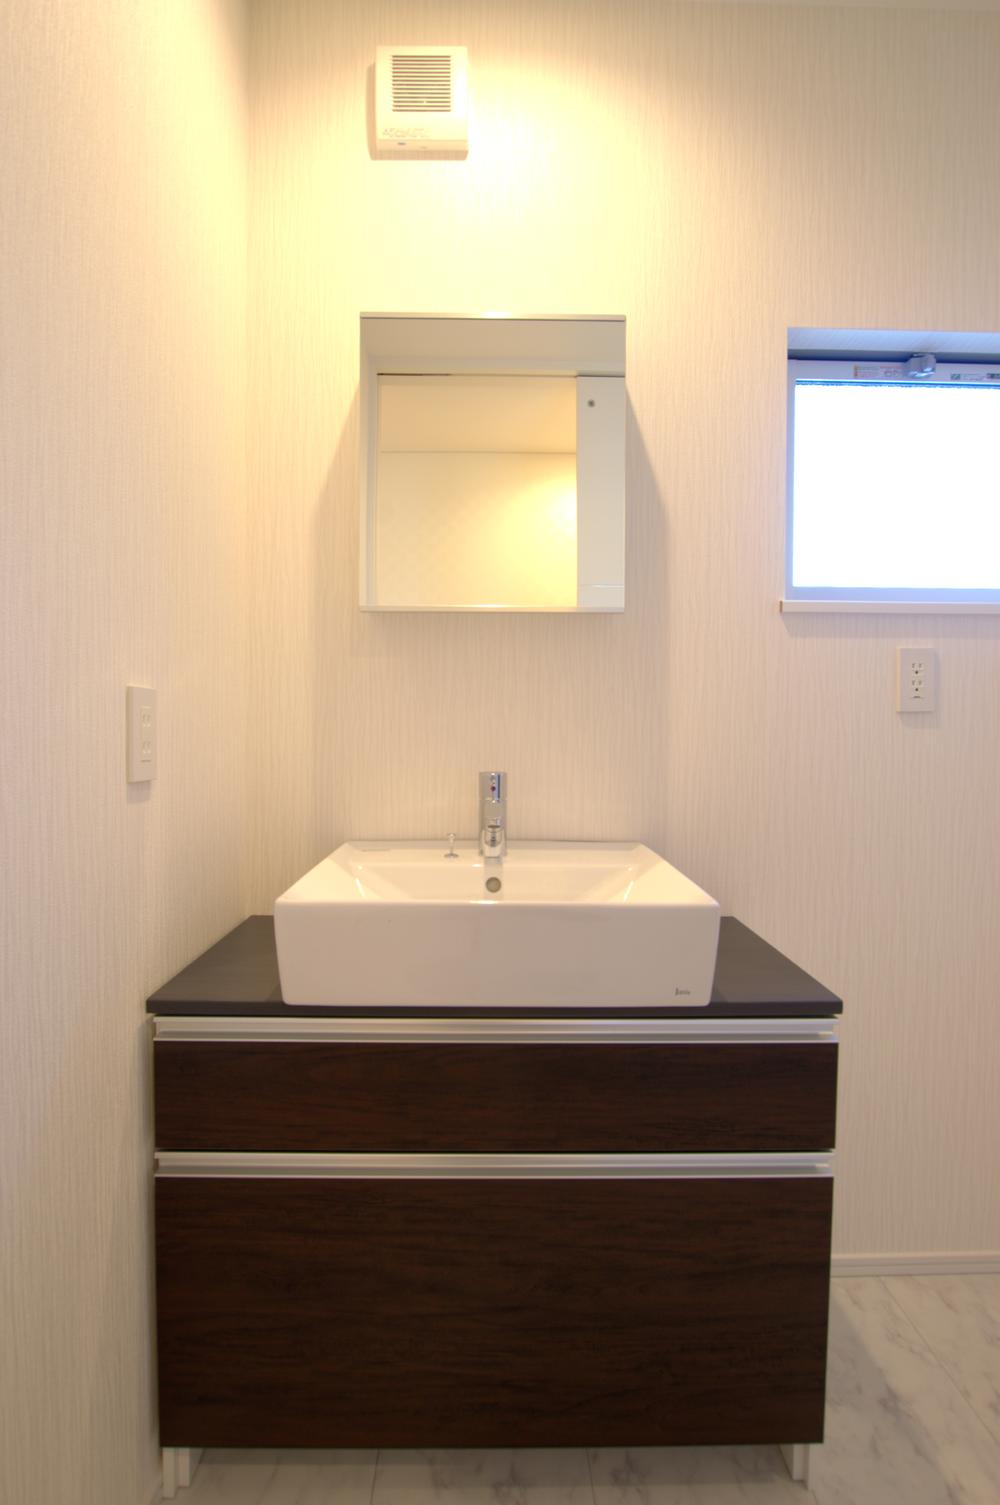 Wash basin, toilet. Stylish bathroom vanity! 